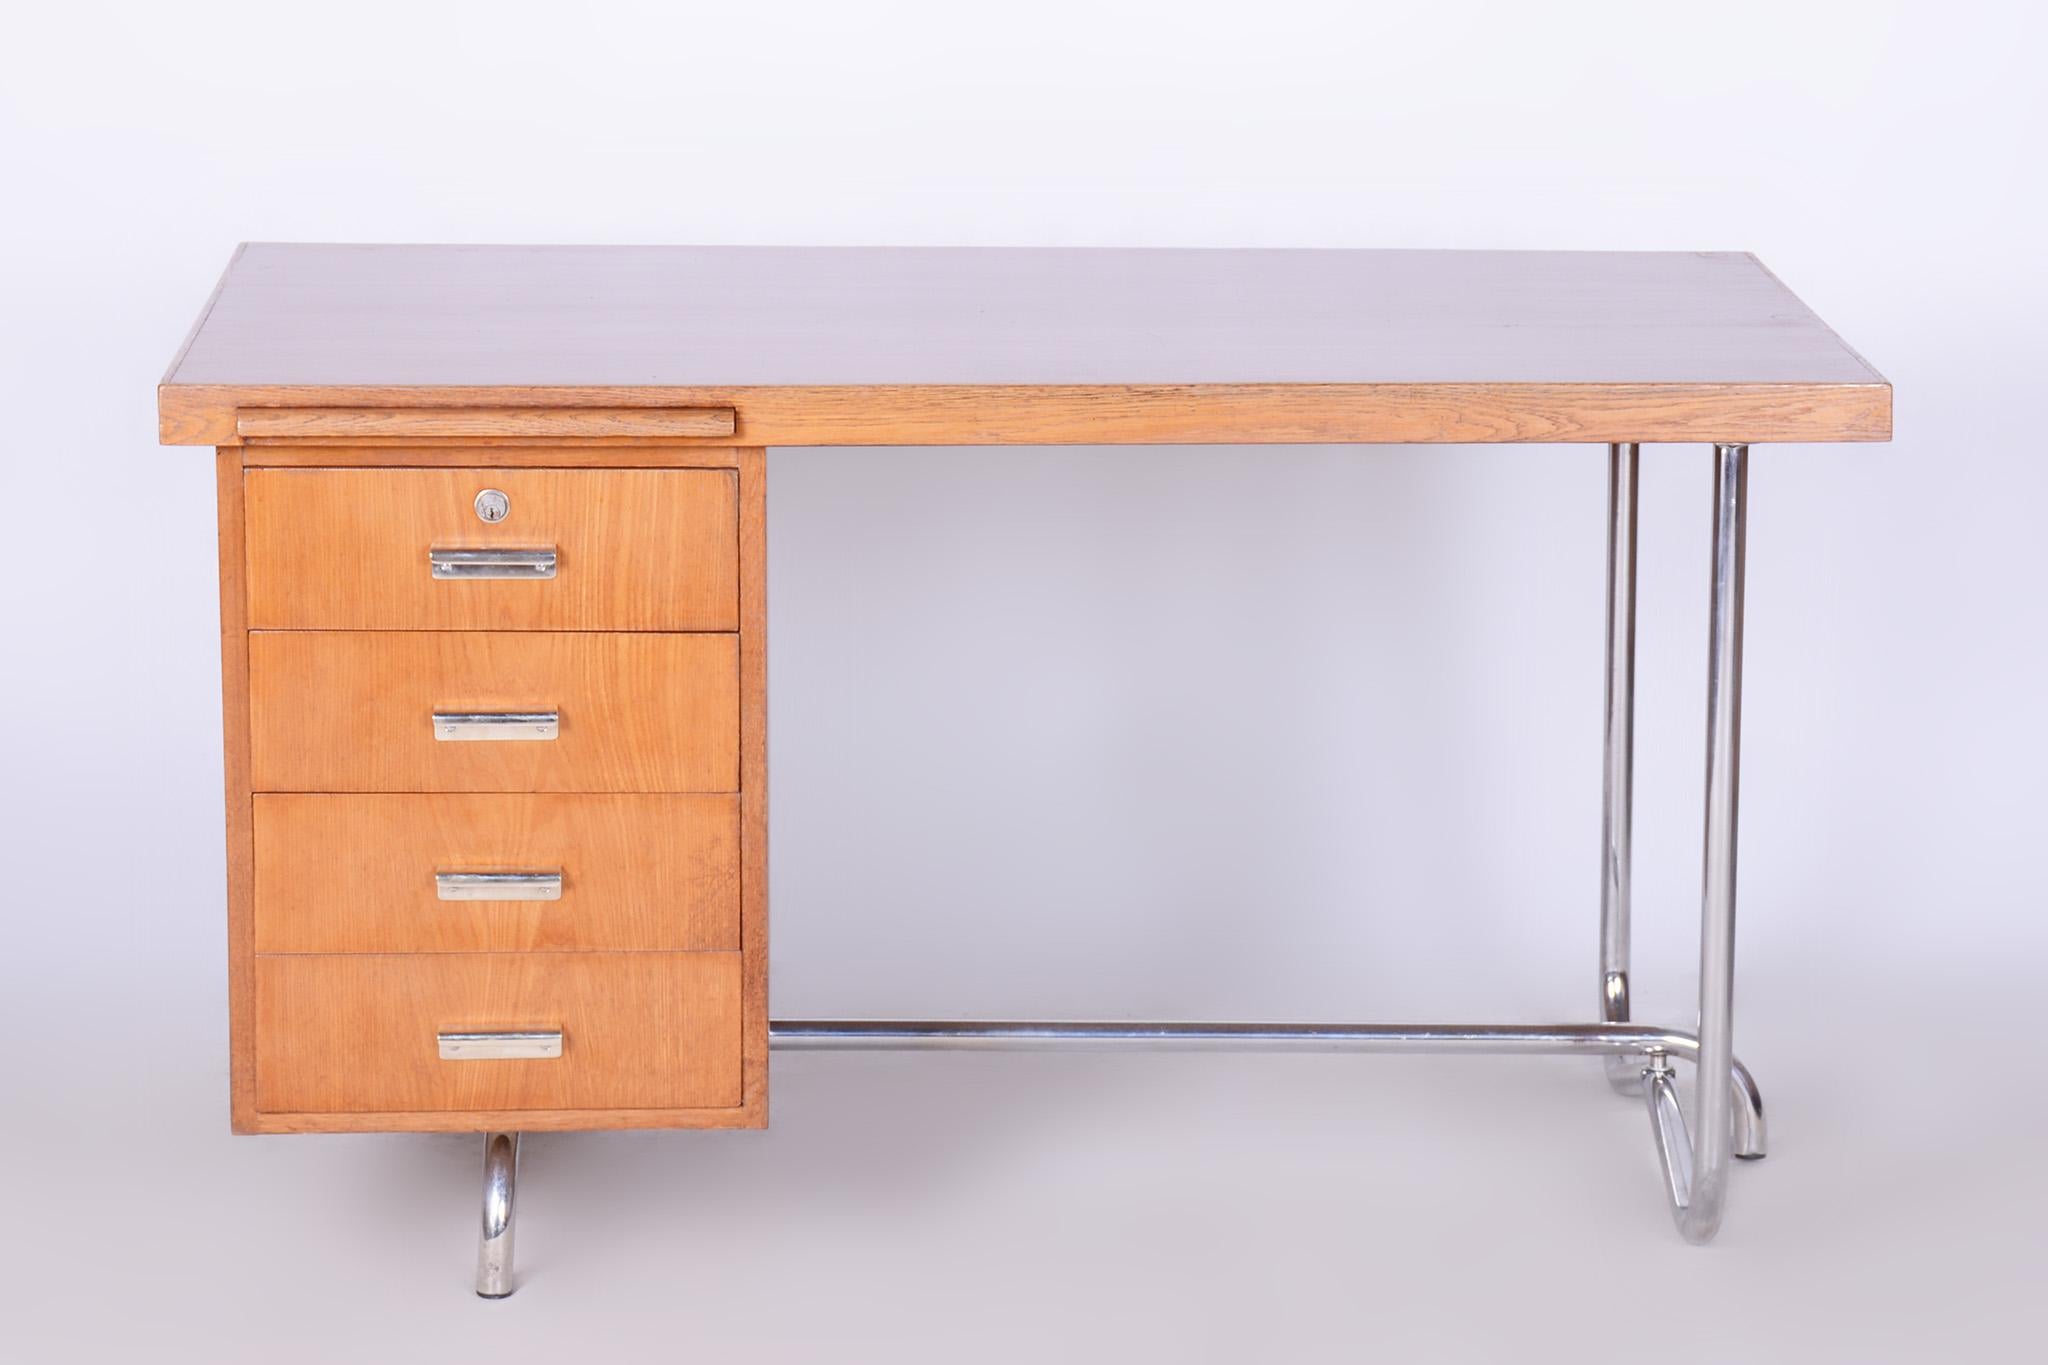 Restored Pair of Oak Writing Desks, Hynek Gottwald, Chrome, Czechia, 1930s For Sale 5